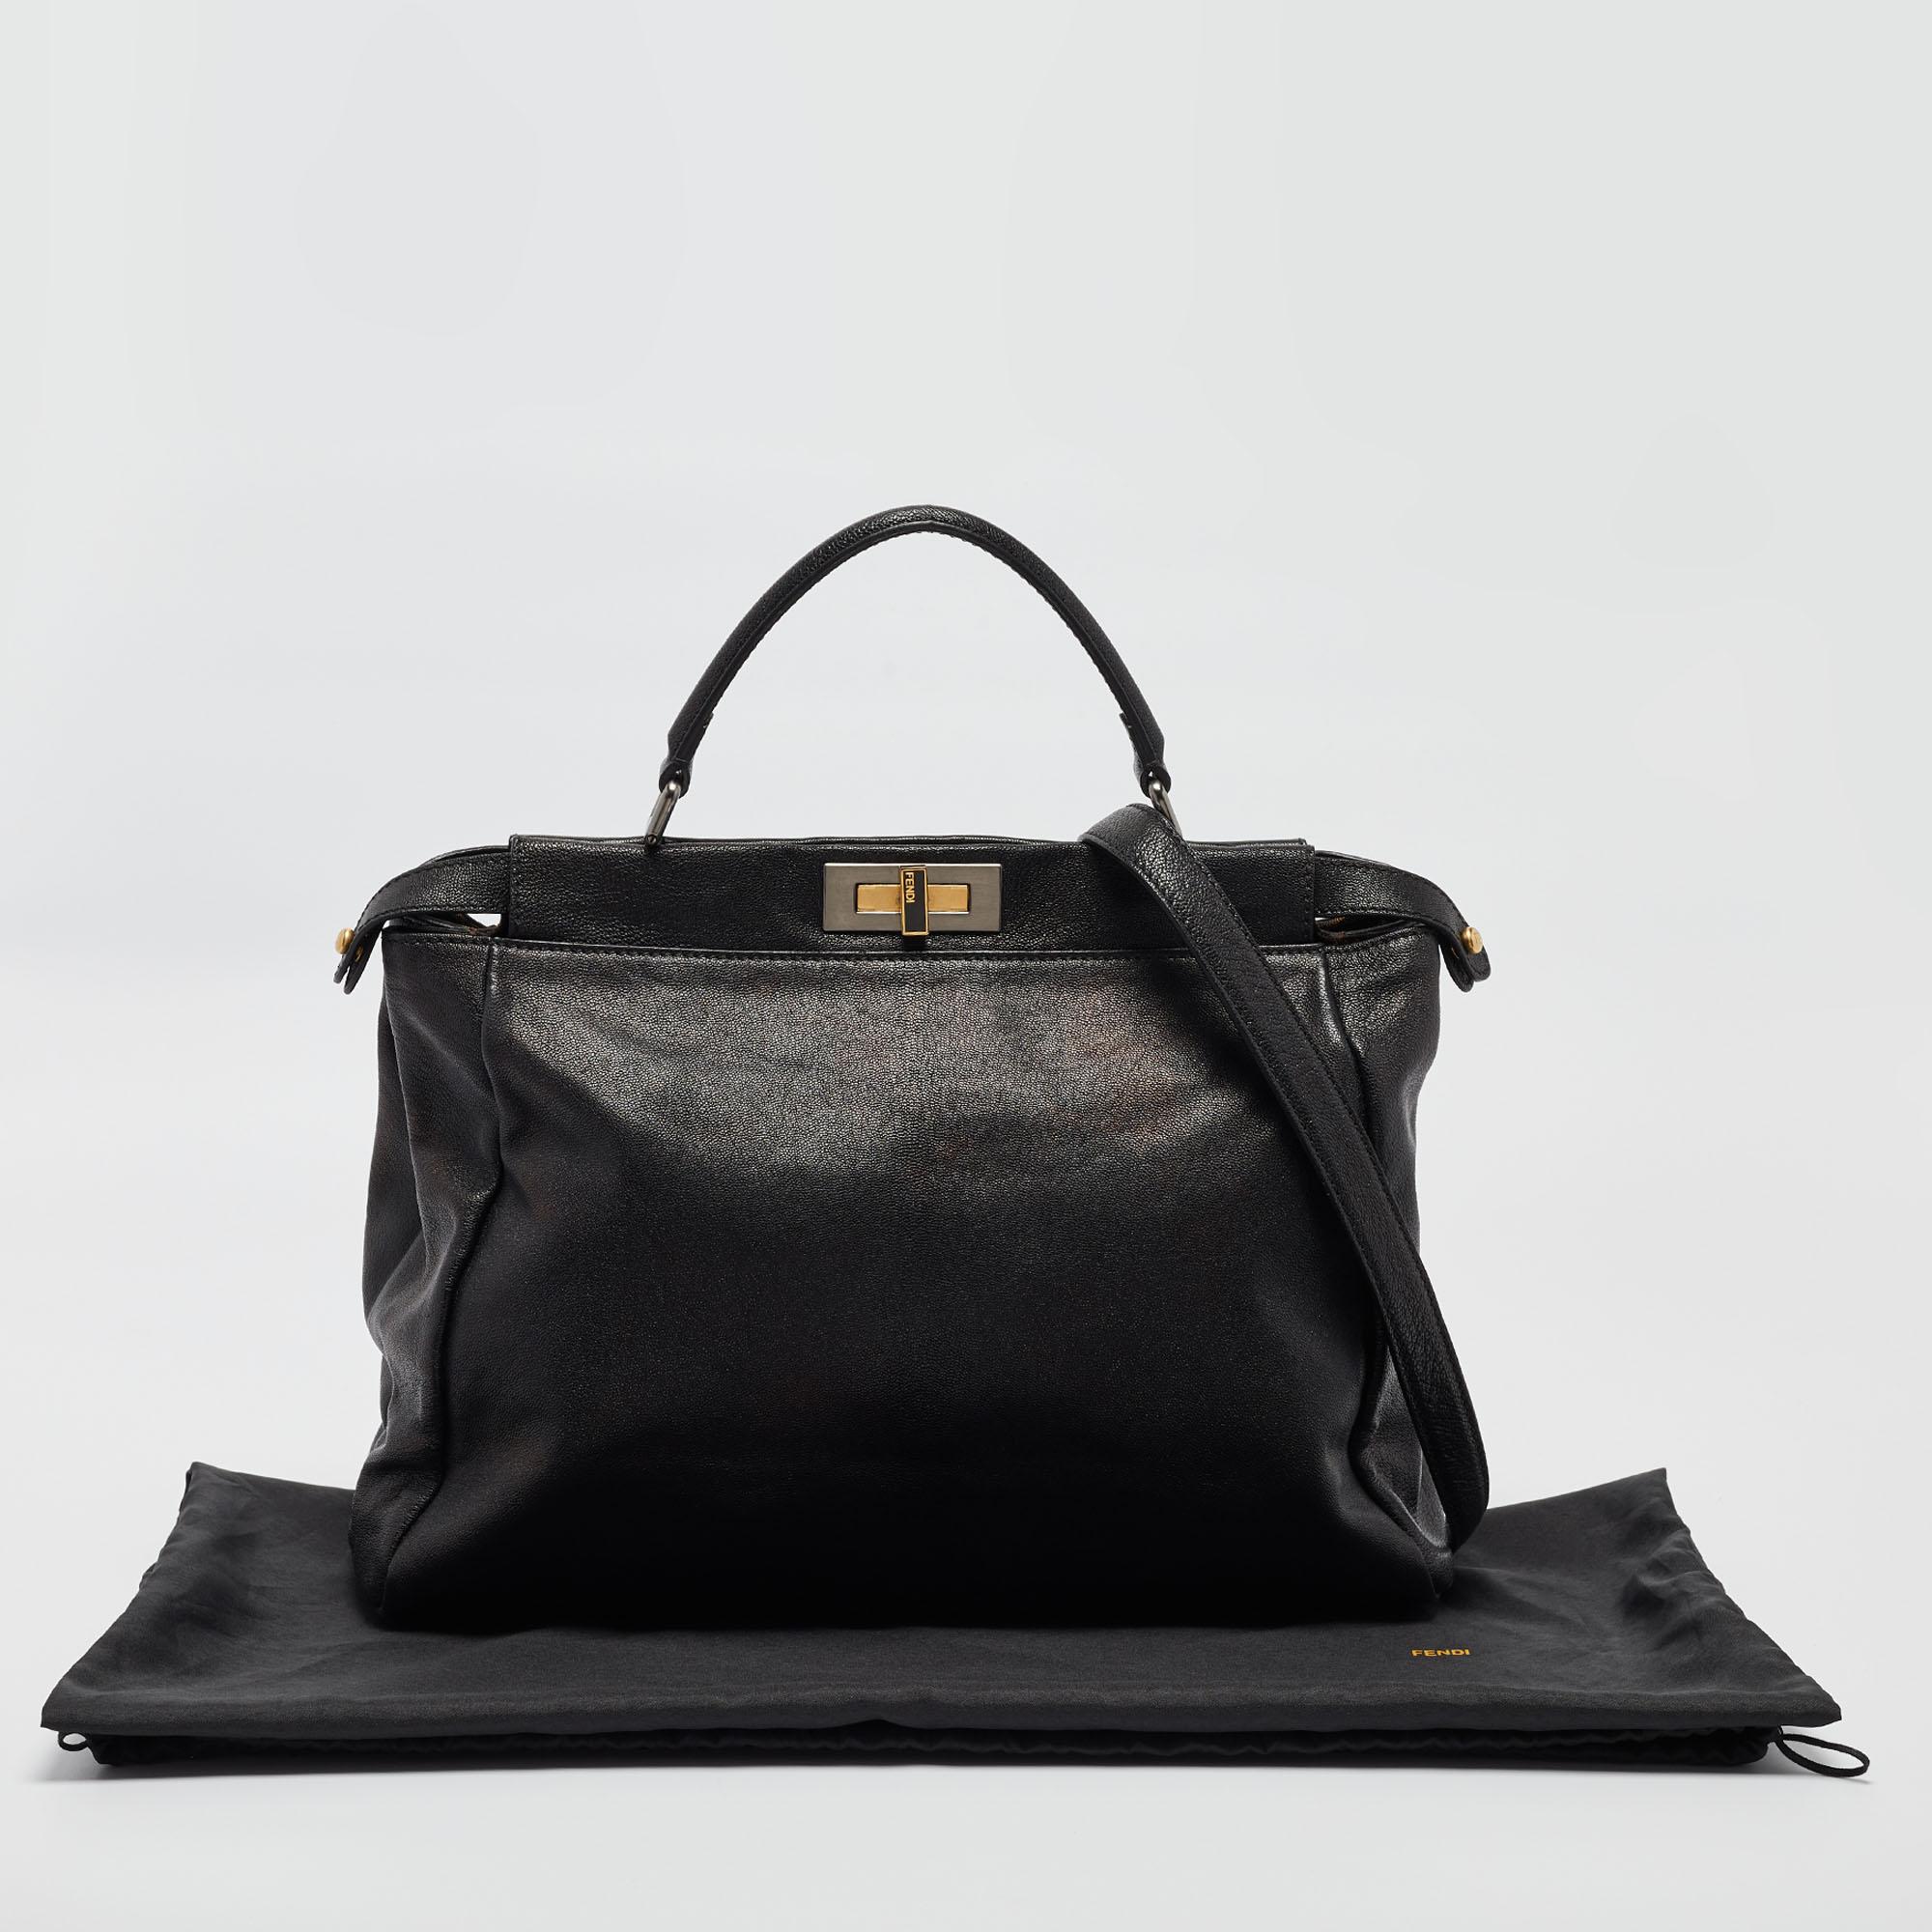 Fendi - Grand sac en cuir noir Peekaboo à poignée supérieure en vente 12